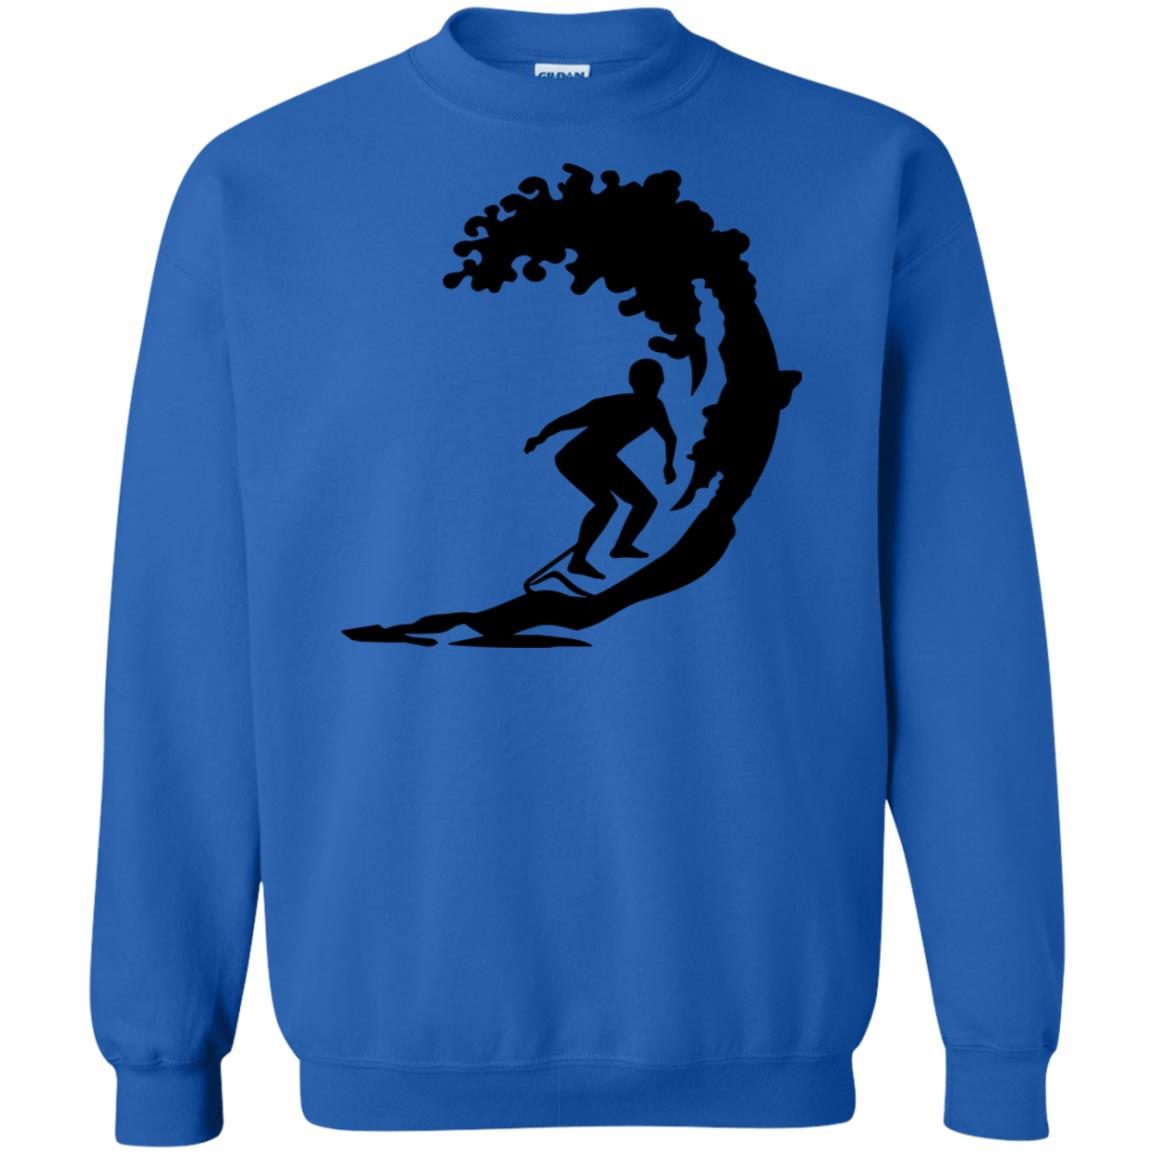 Surfing Shirt